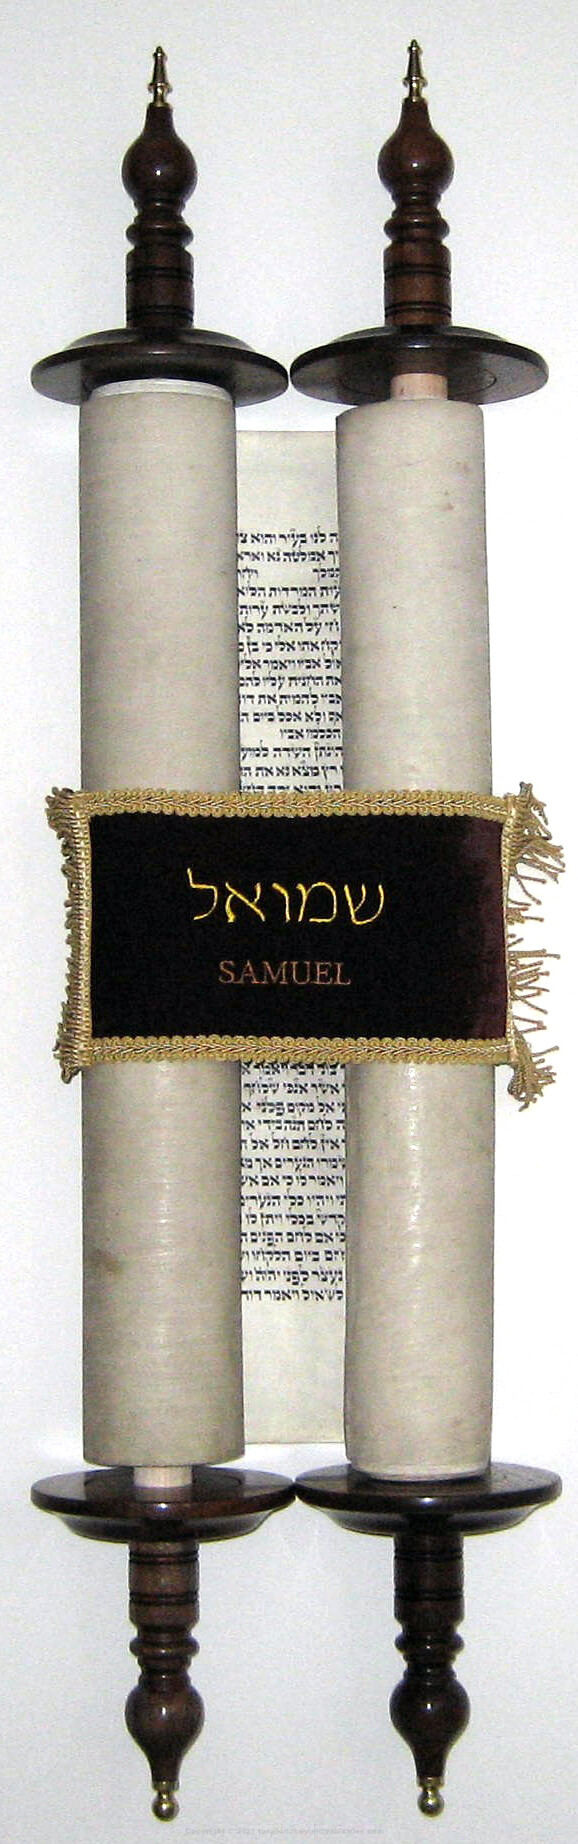 Samuel 4